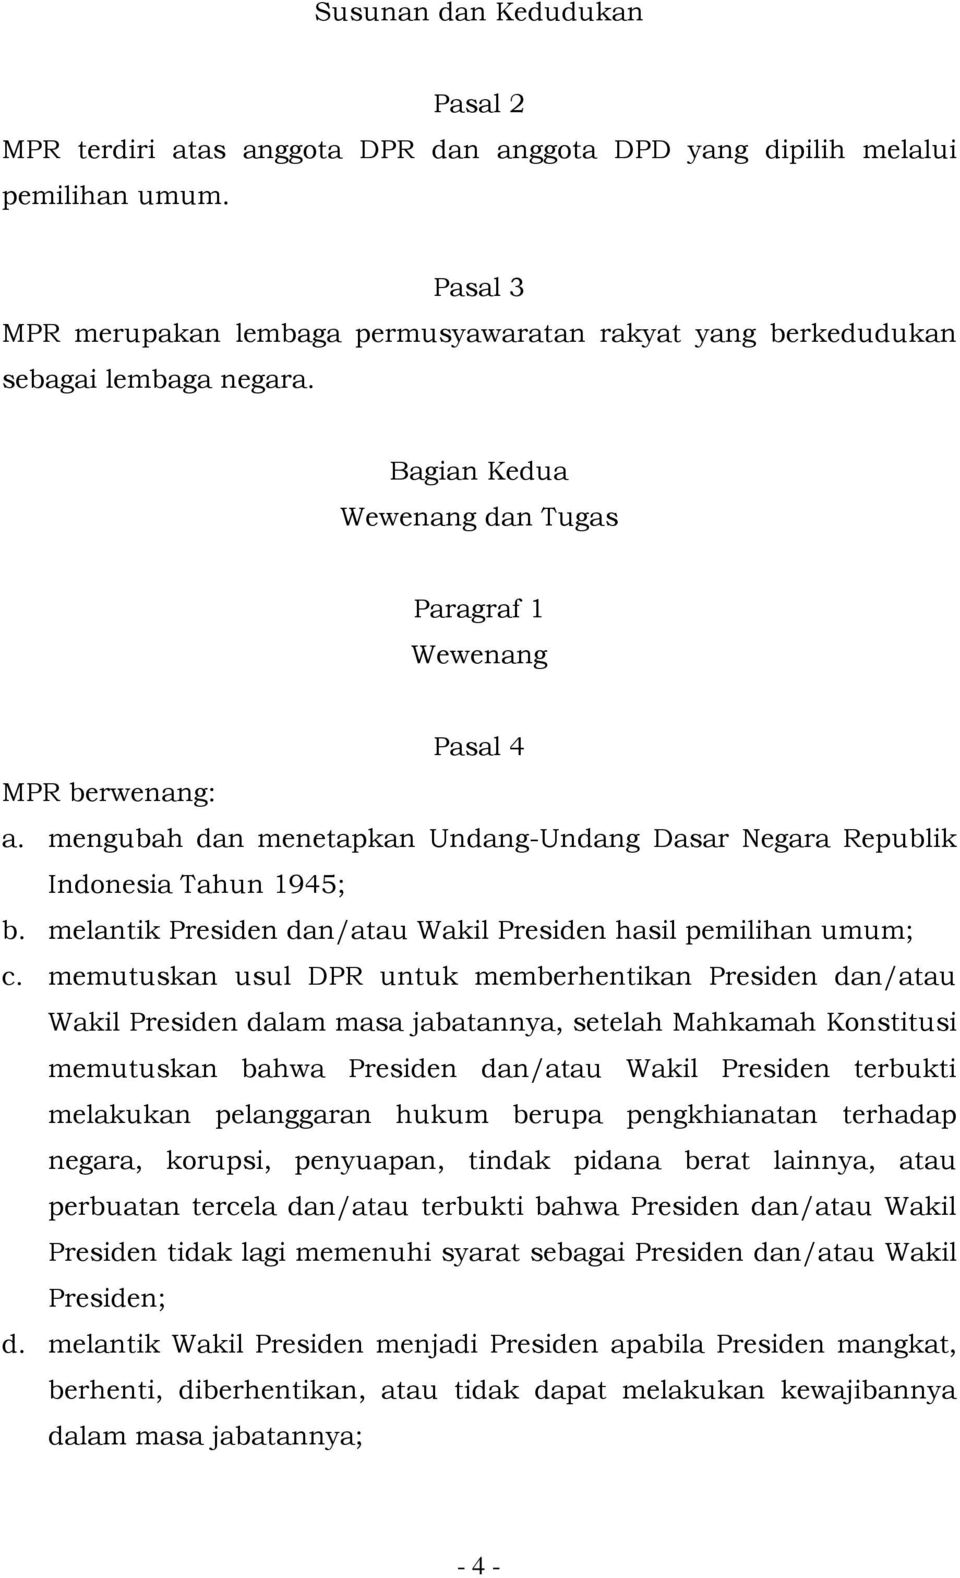 mengubah dan menetapkan Undang-Undang Dasar Negara Republik Indonesia Tahun 1945; b. melantik Presiden dan/atau Wakil Presiden hasil pemilihan umum; c.